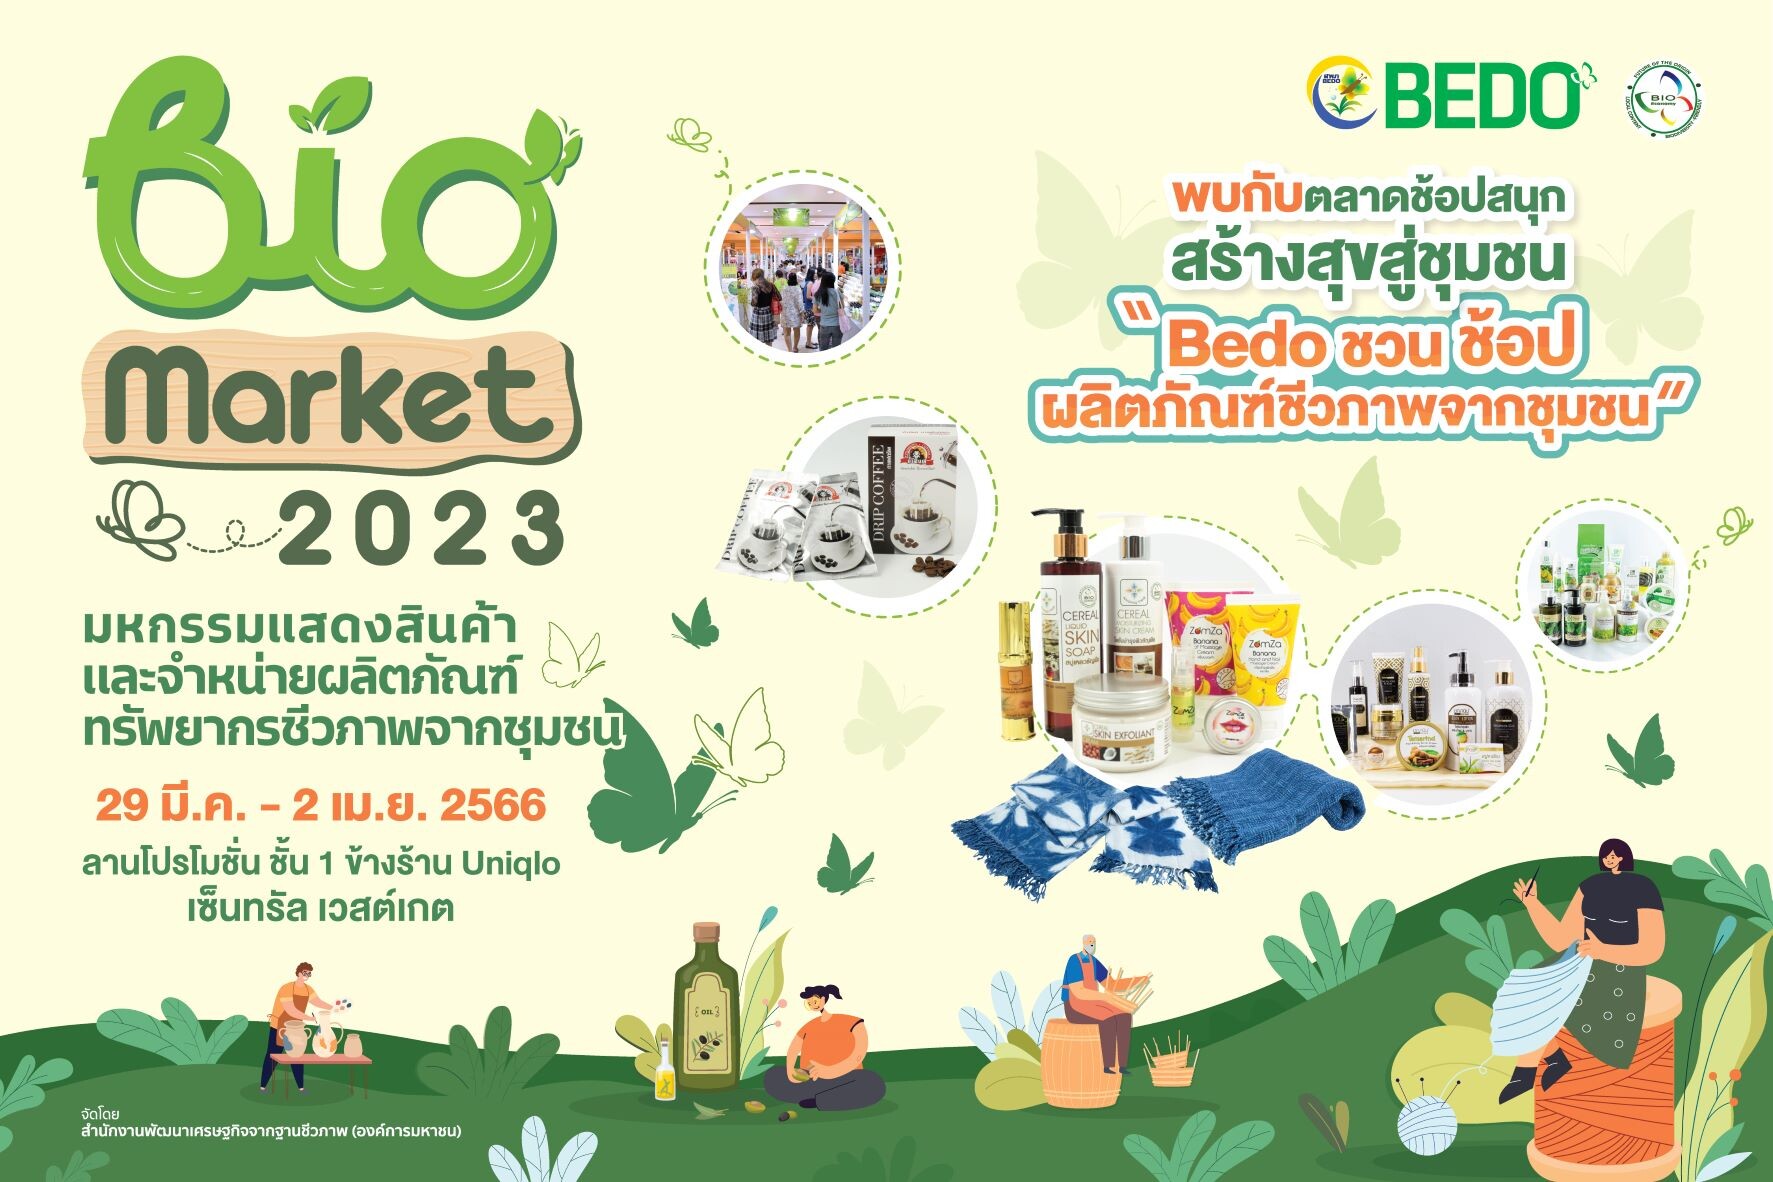 BEDO ชวน ชม ช้อป ในงาน Bio Market 2023 มหกรรมแสดงสินค้าและจำหน่ายผลิตภัณฑ์ทรัพยากรชีวภาพจากชุมชน